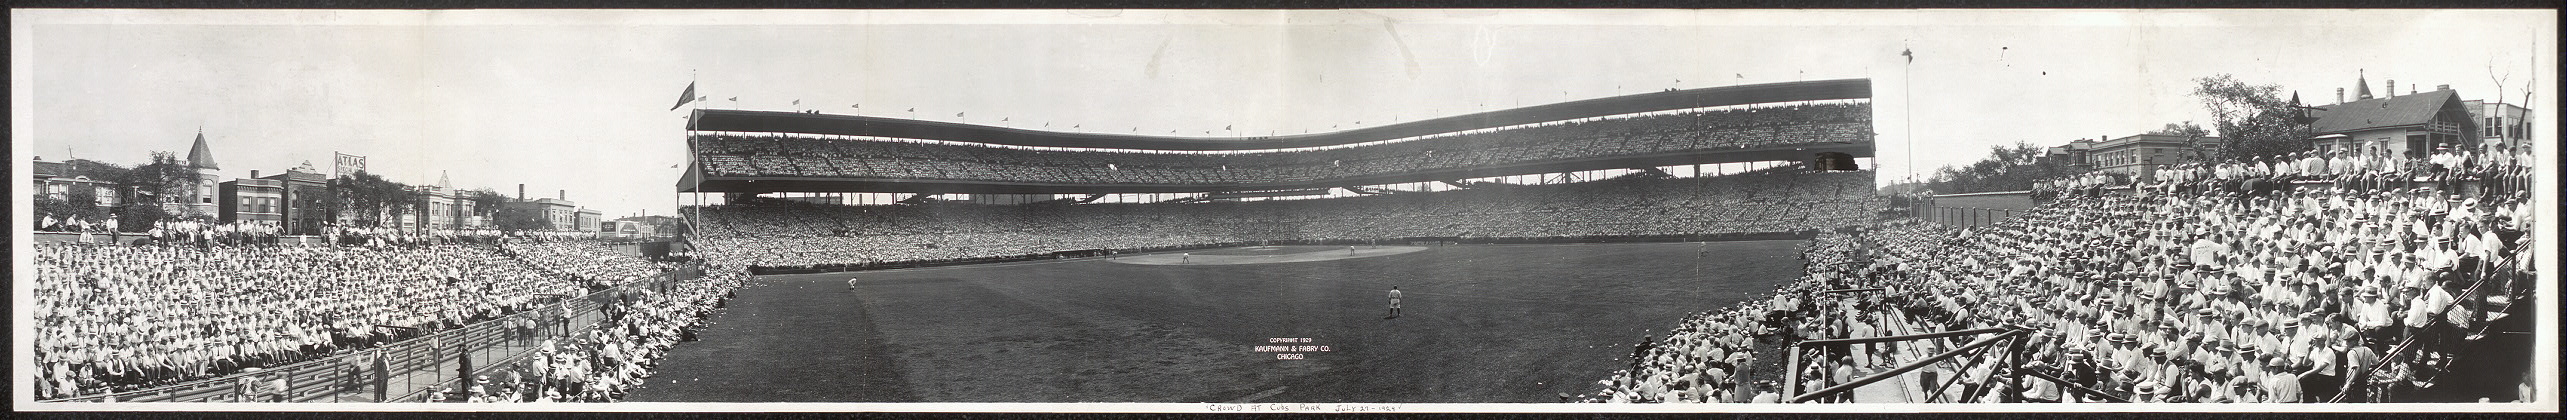 Crowd at Cubs Park, July 27, 1929.jpg